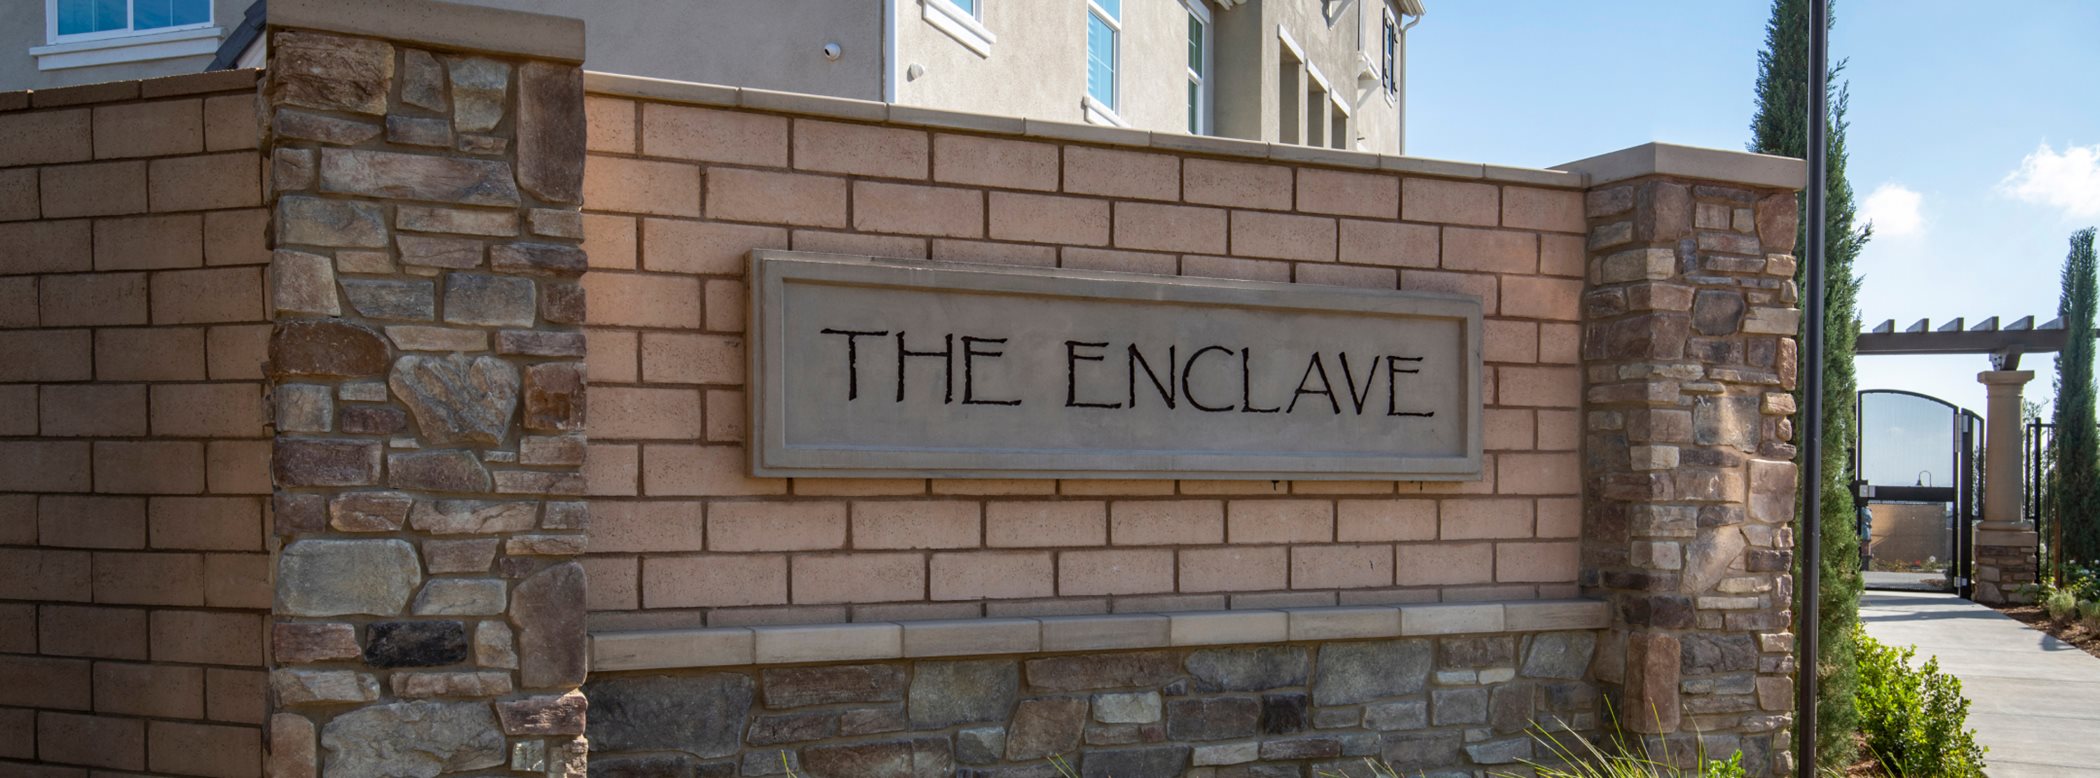 Enclave entry monument